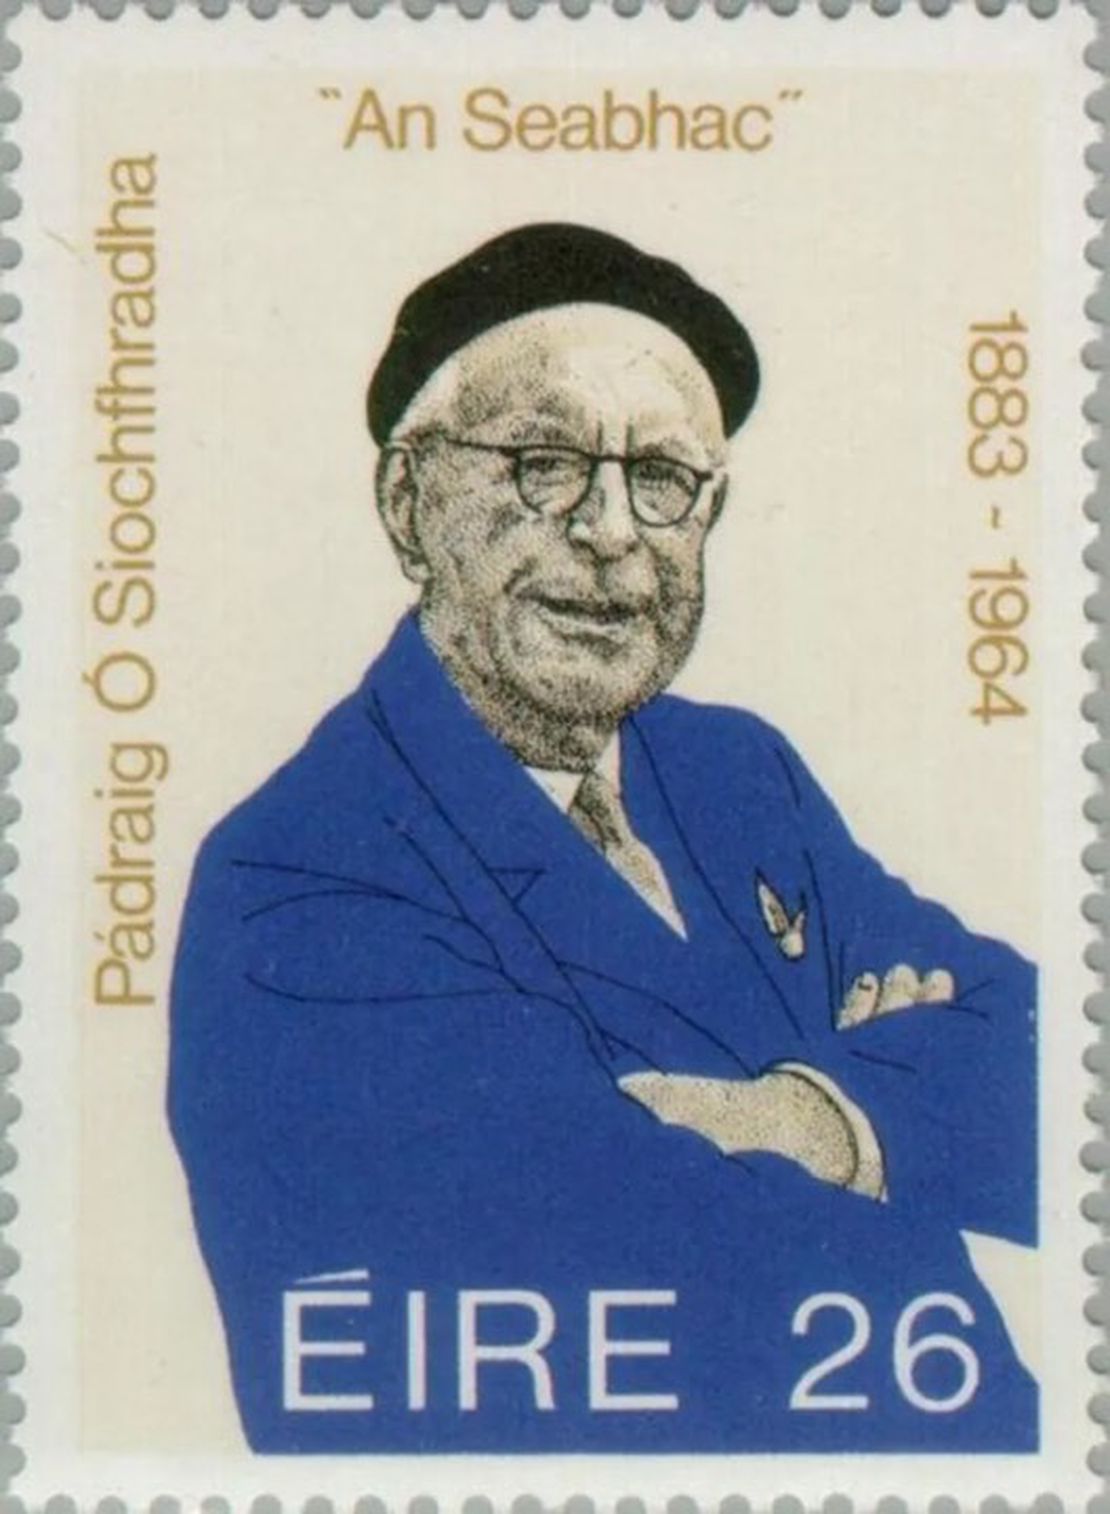 Pádraig Ó Siochfhradha, writer is born in Dingle, Co. Kerry